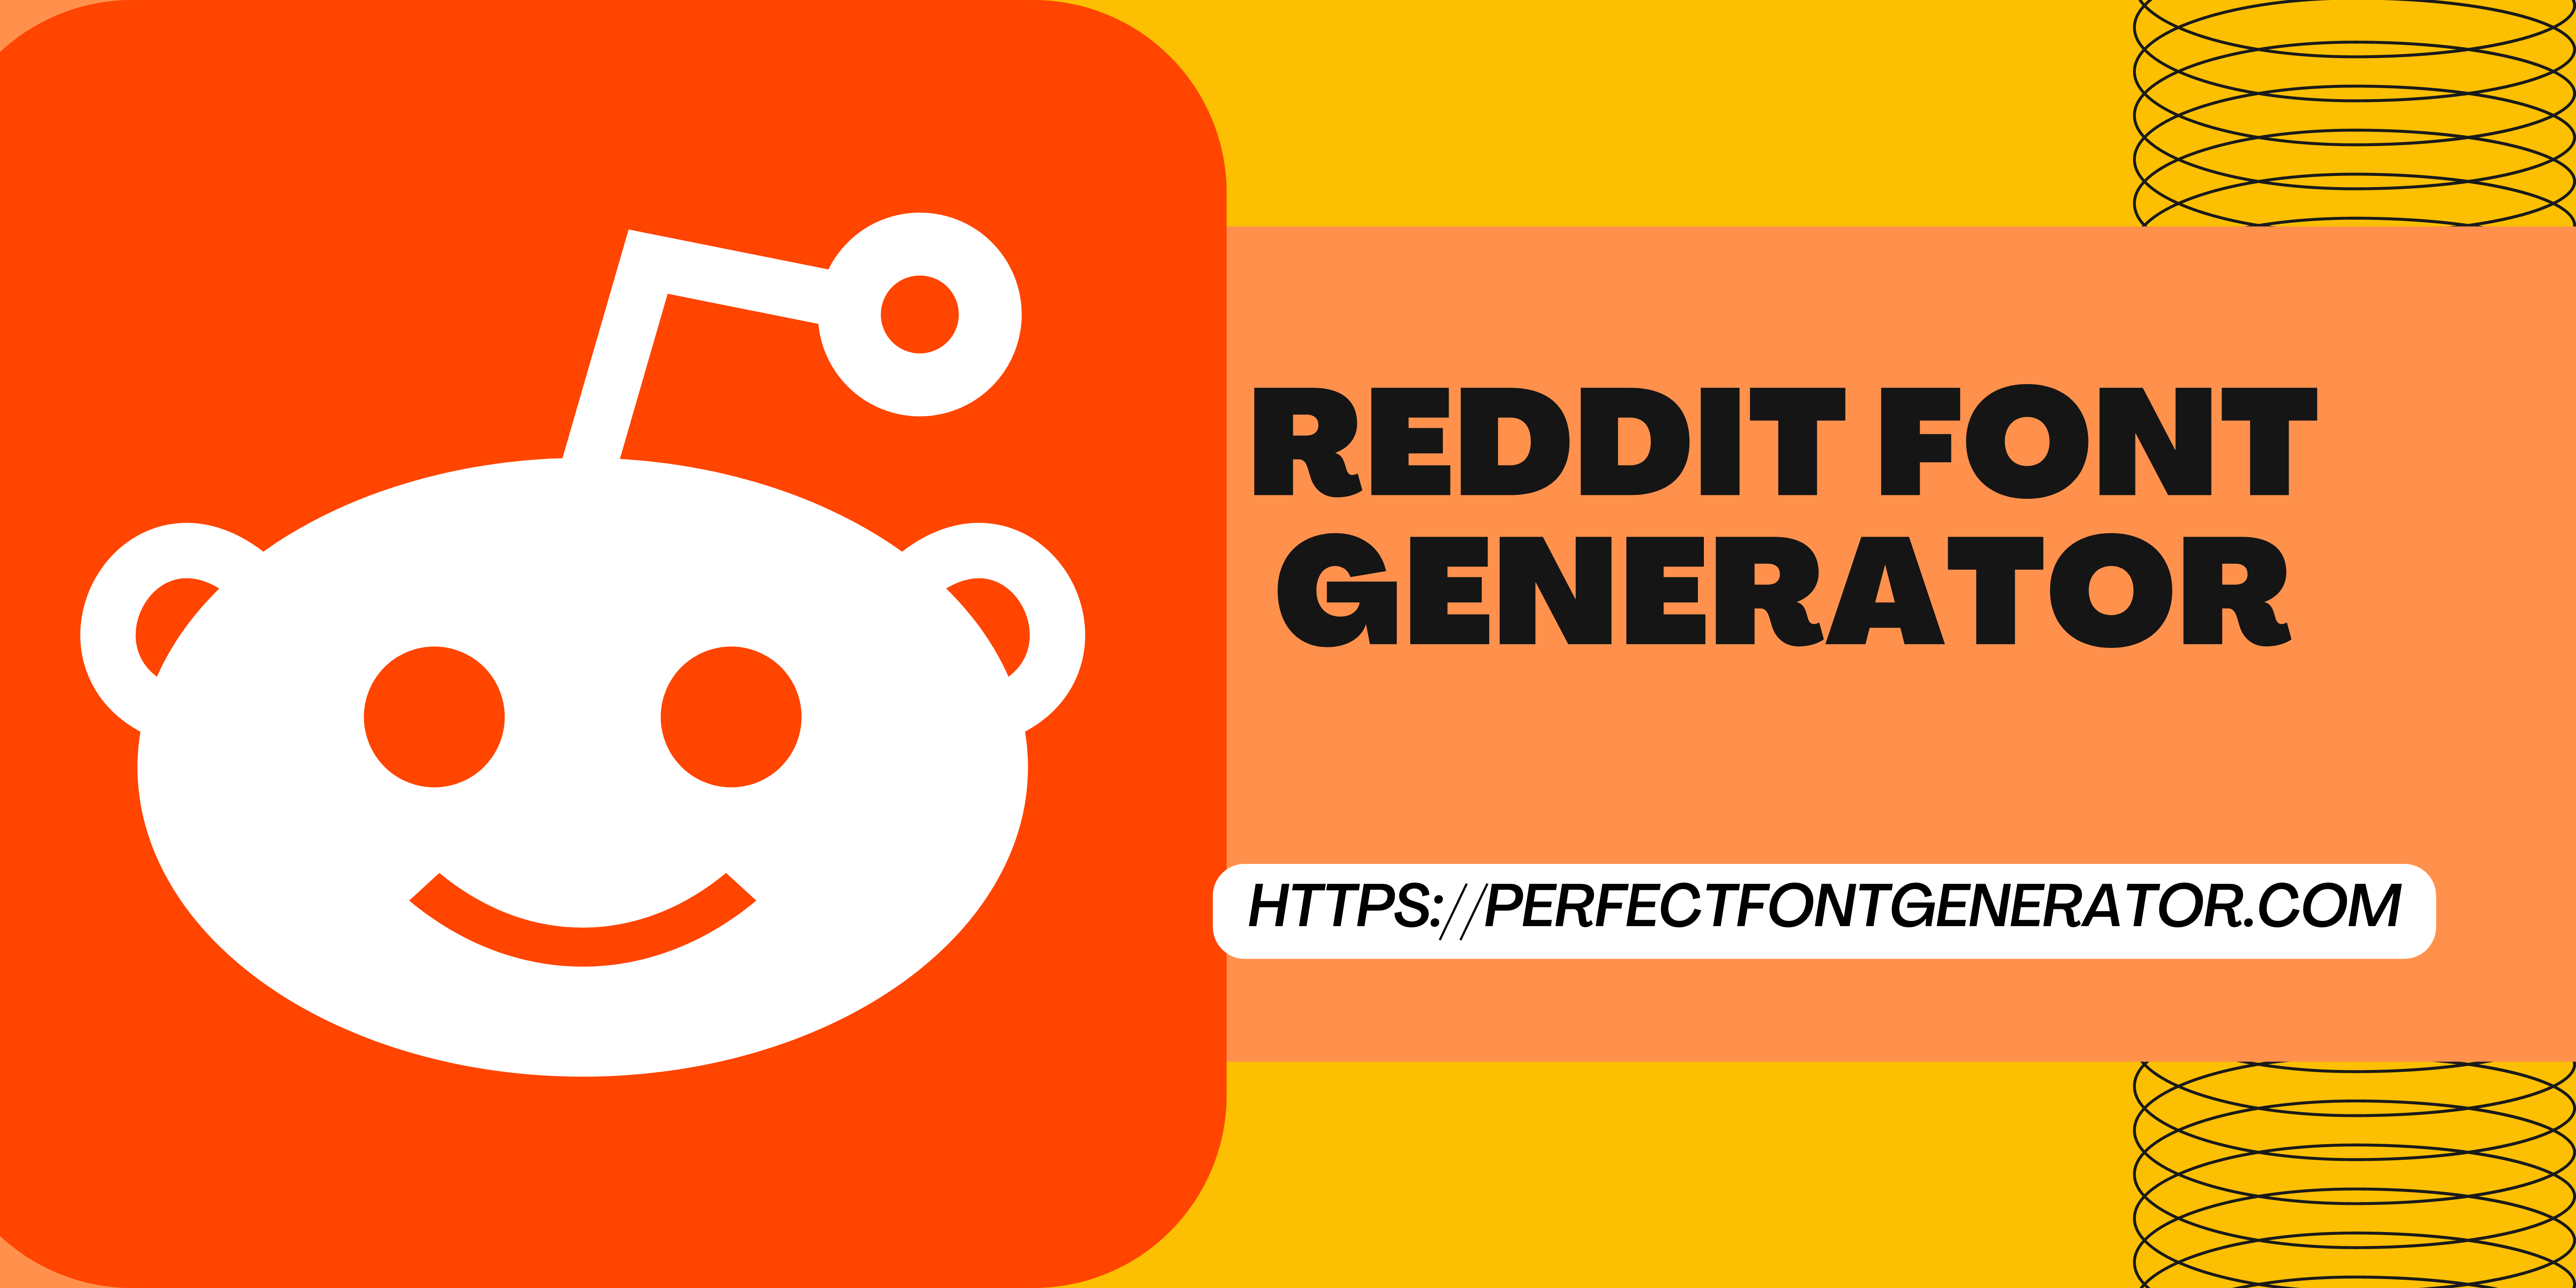 Reddit font generator